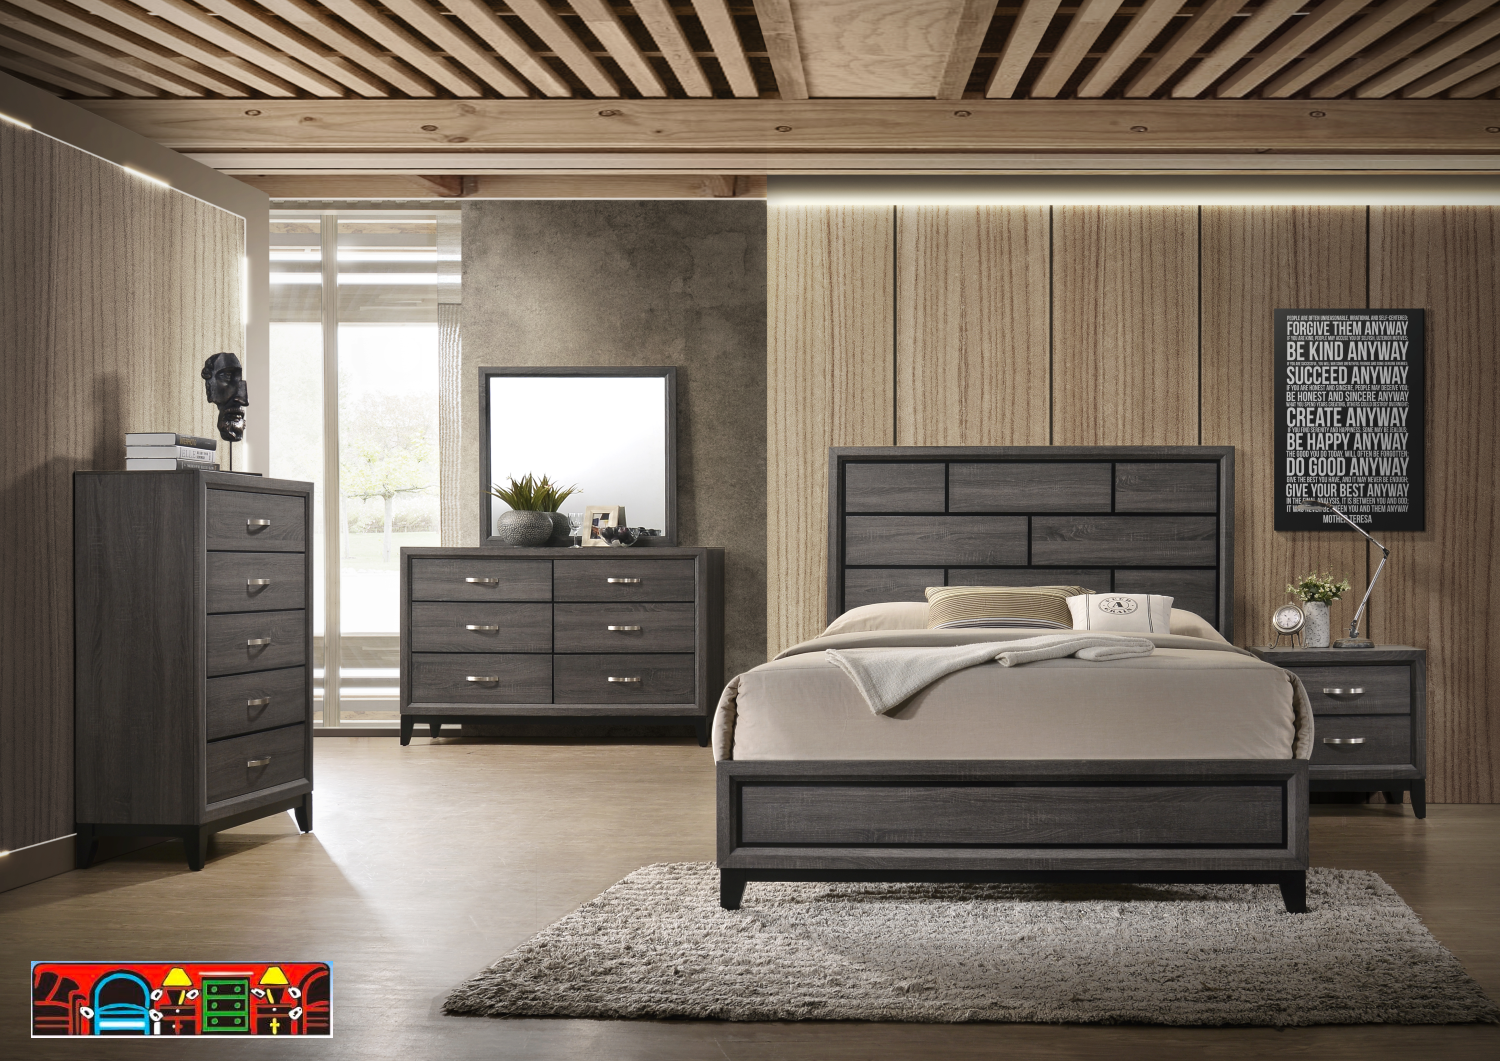 Eva bedroom set in grey wash with black accents and metal handles.